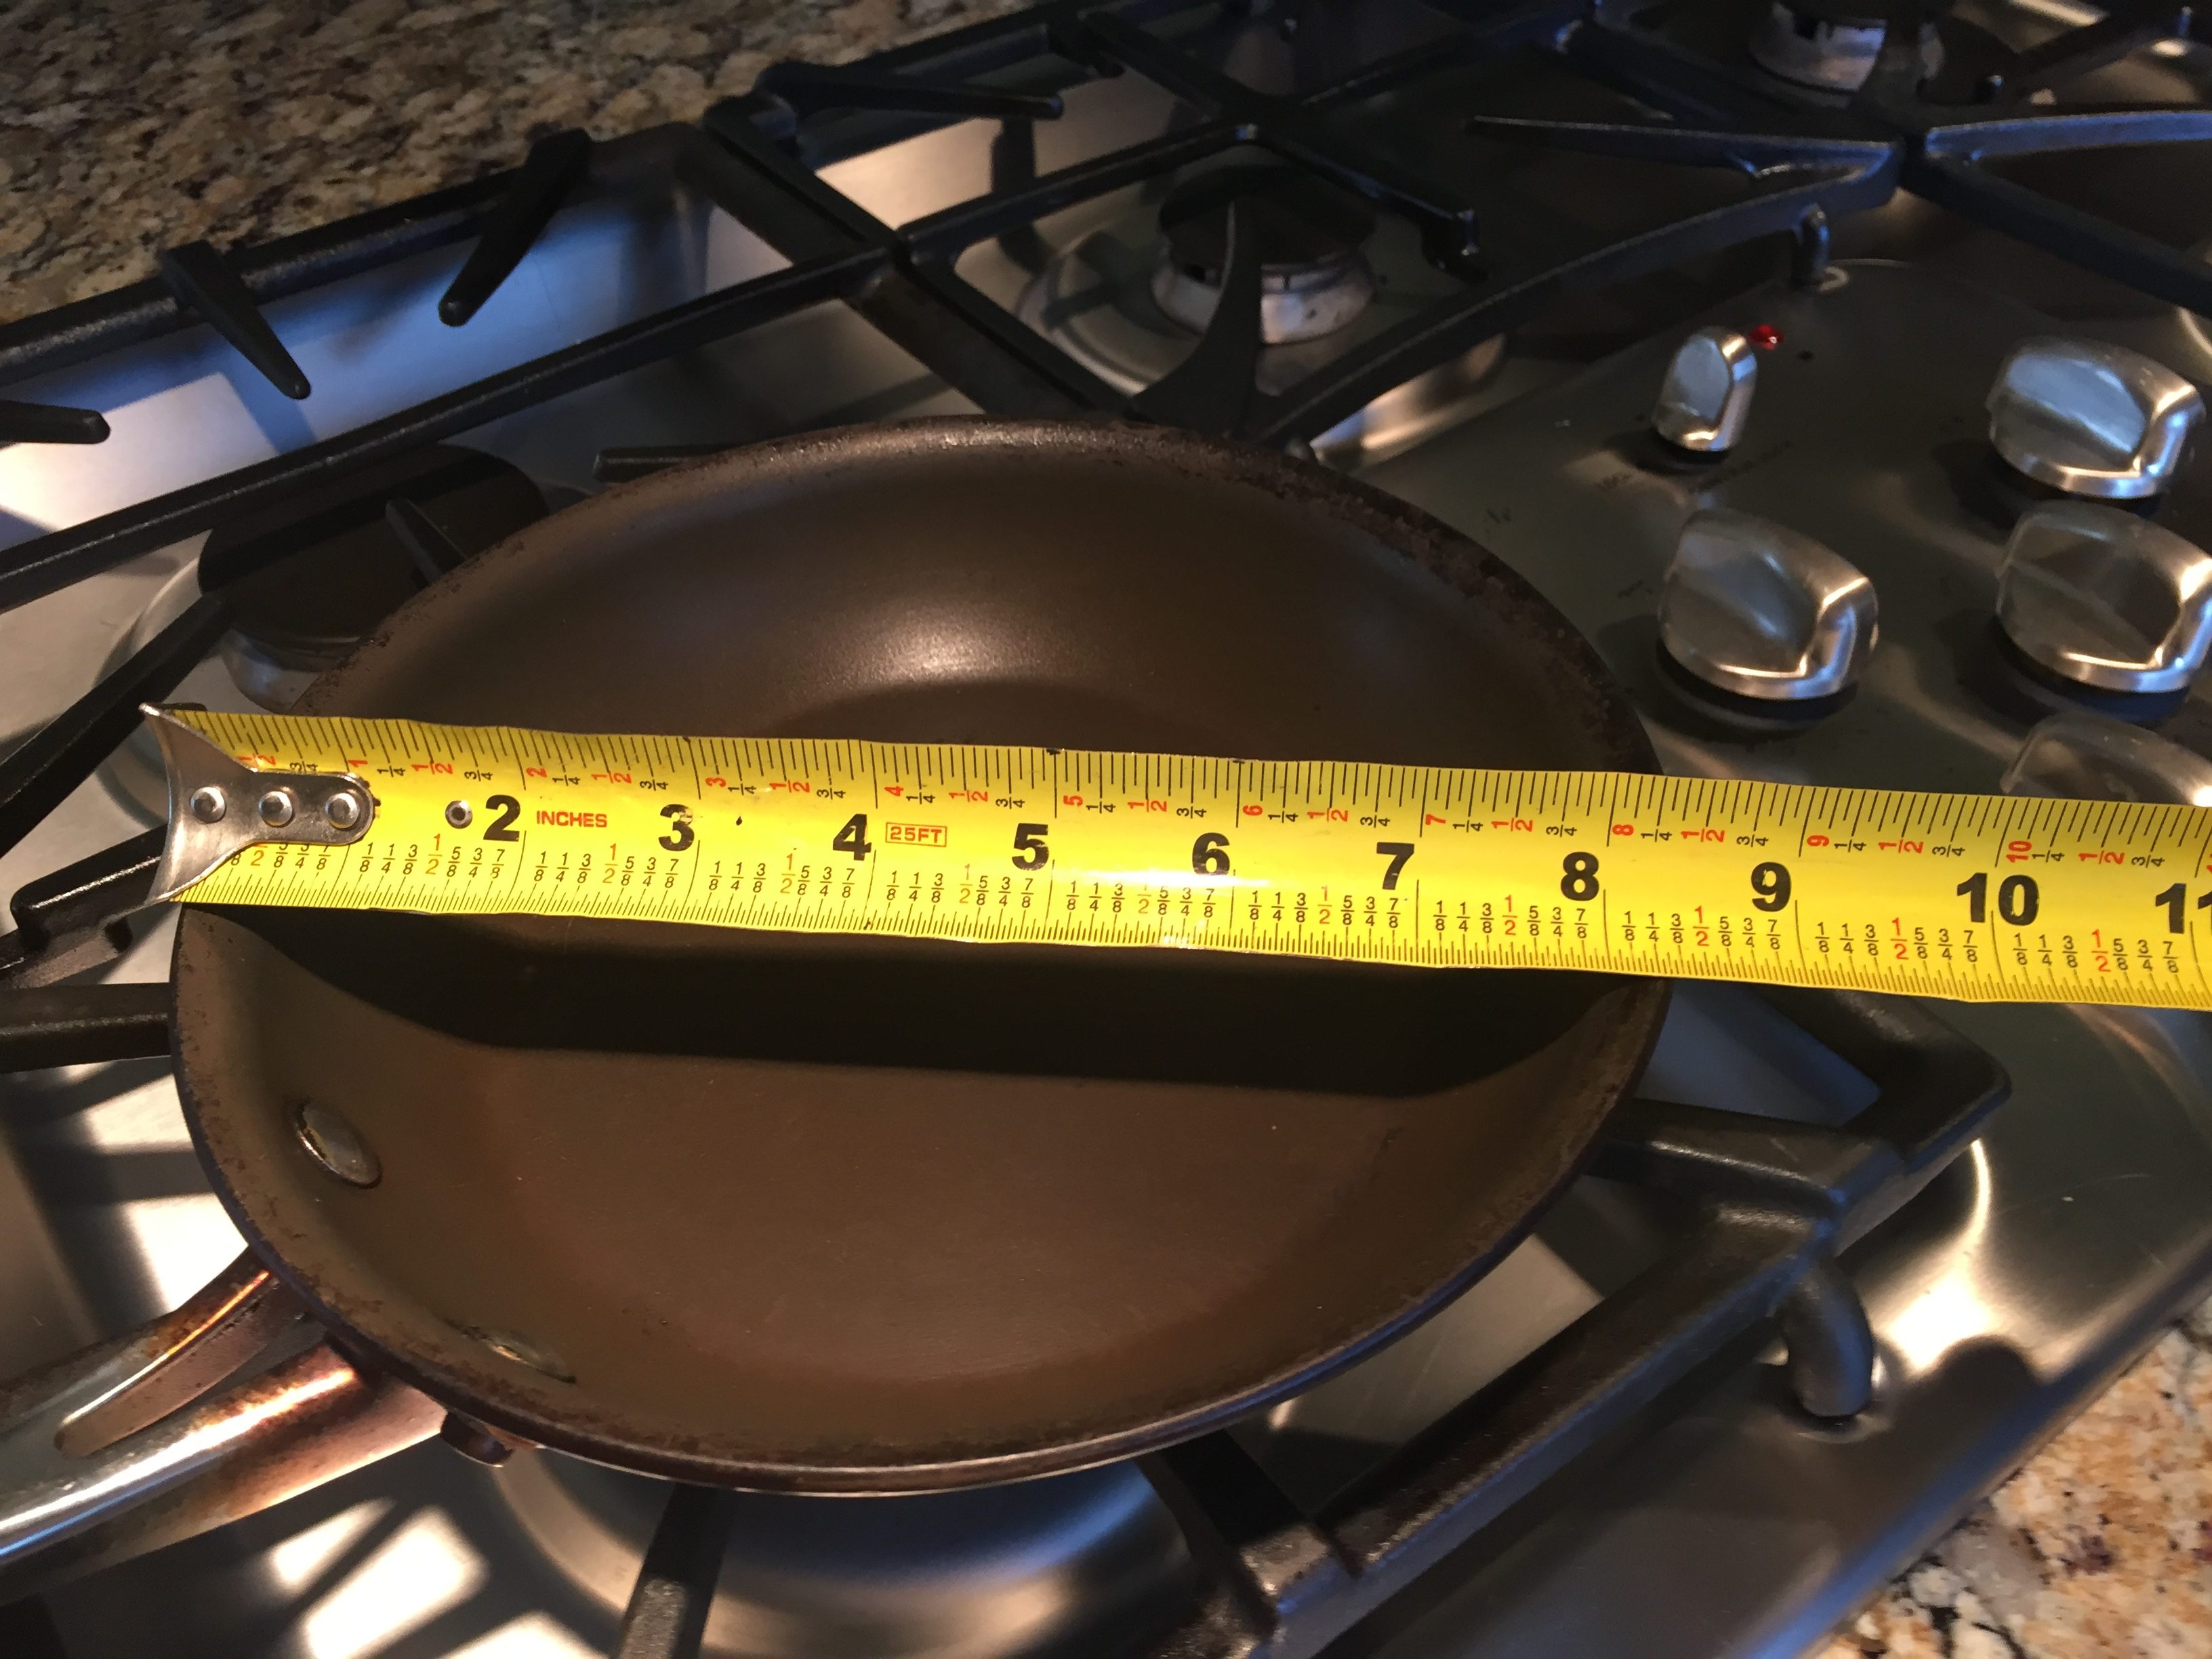 How Big is Your Frying Pan?